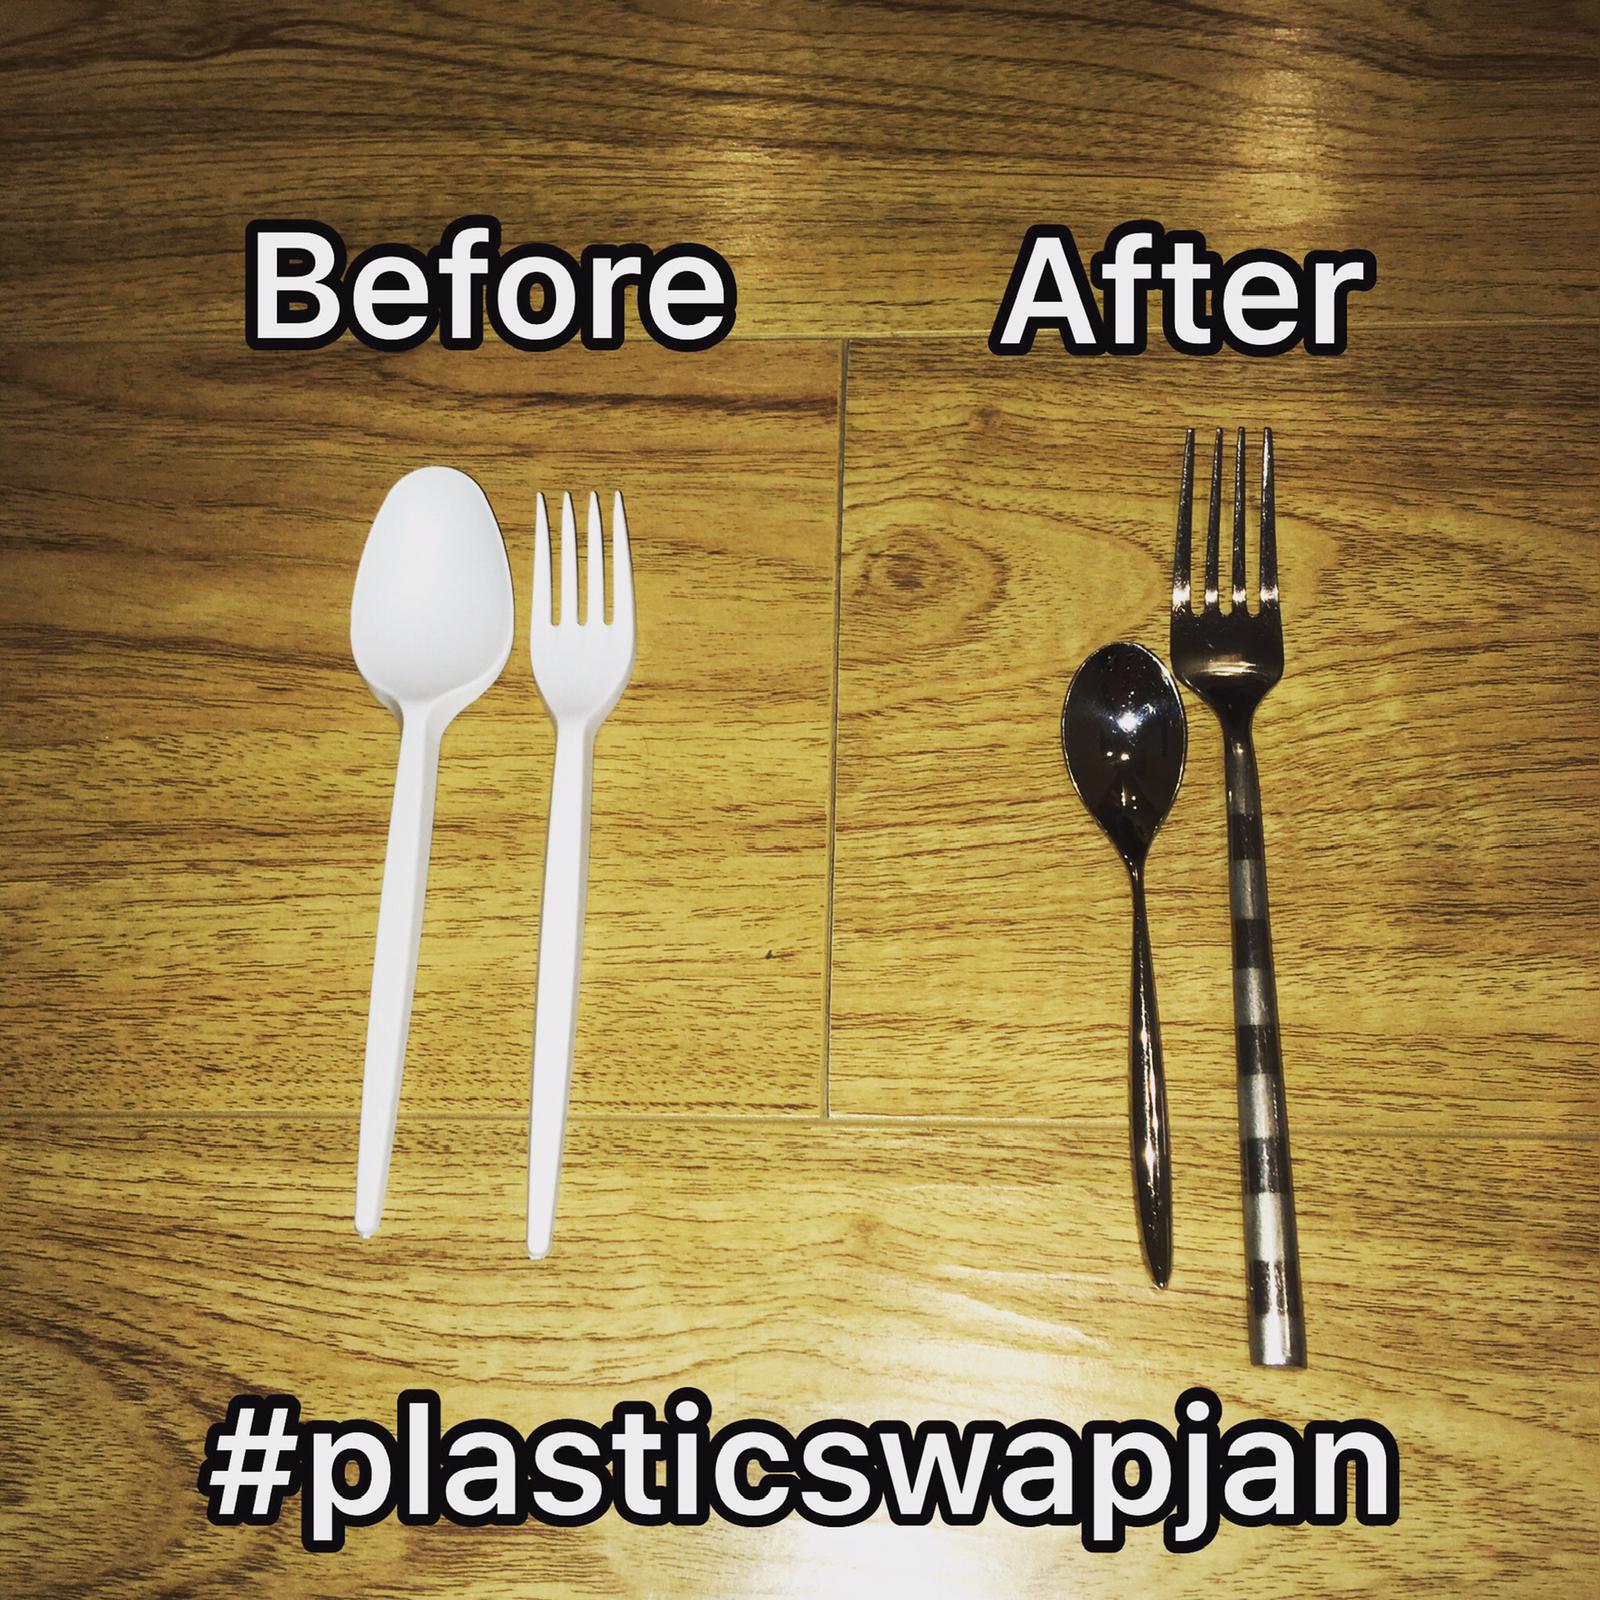 Plastic and metal utensils.